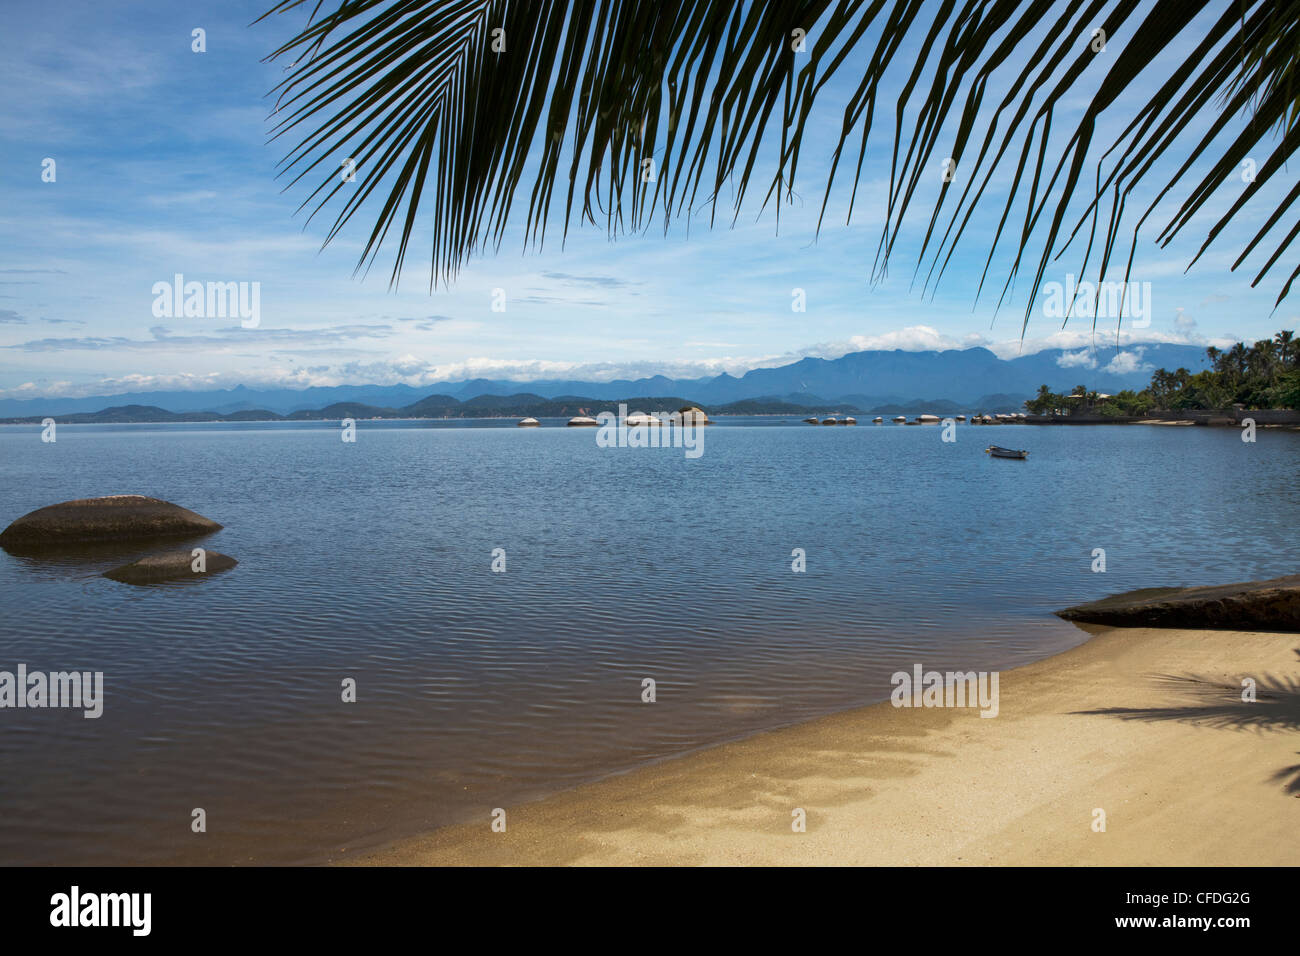 Isla paqueta fotografías e imágenes de alta resolución - Alamy